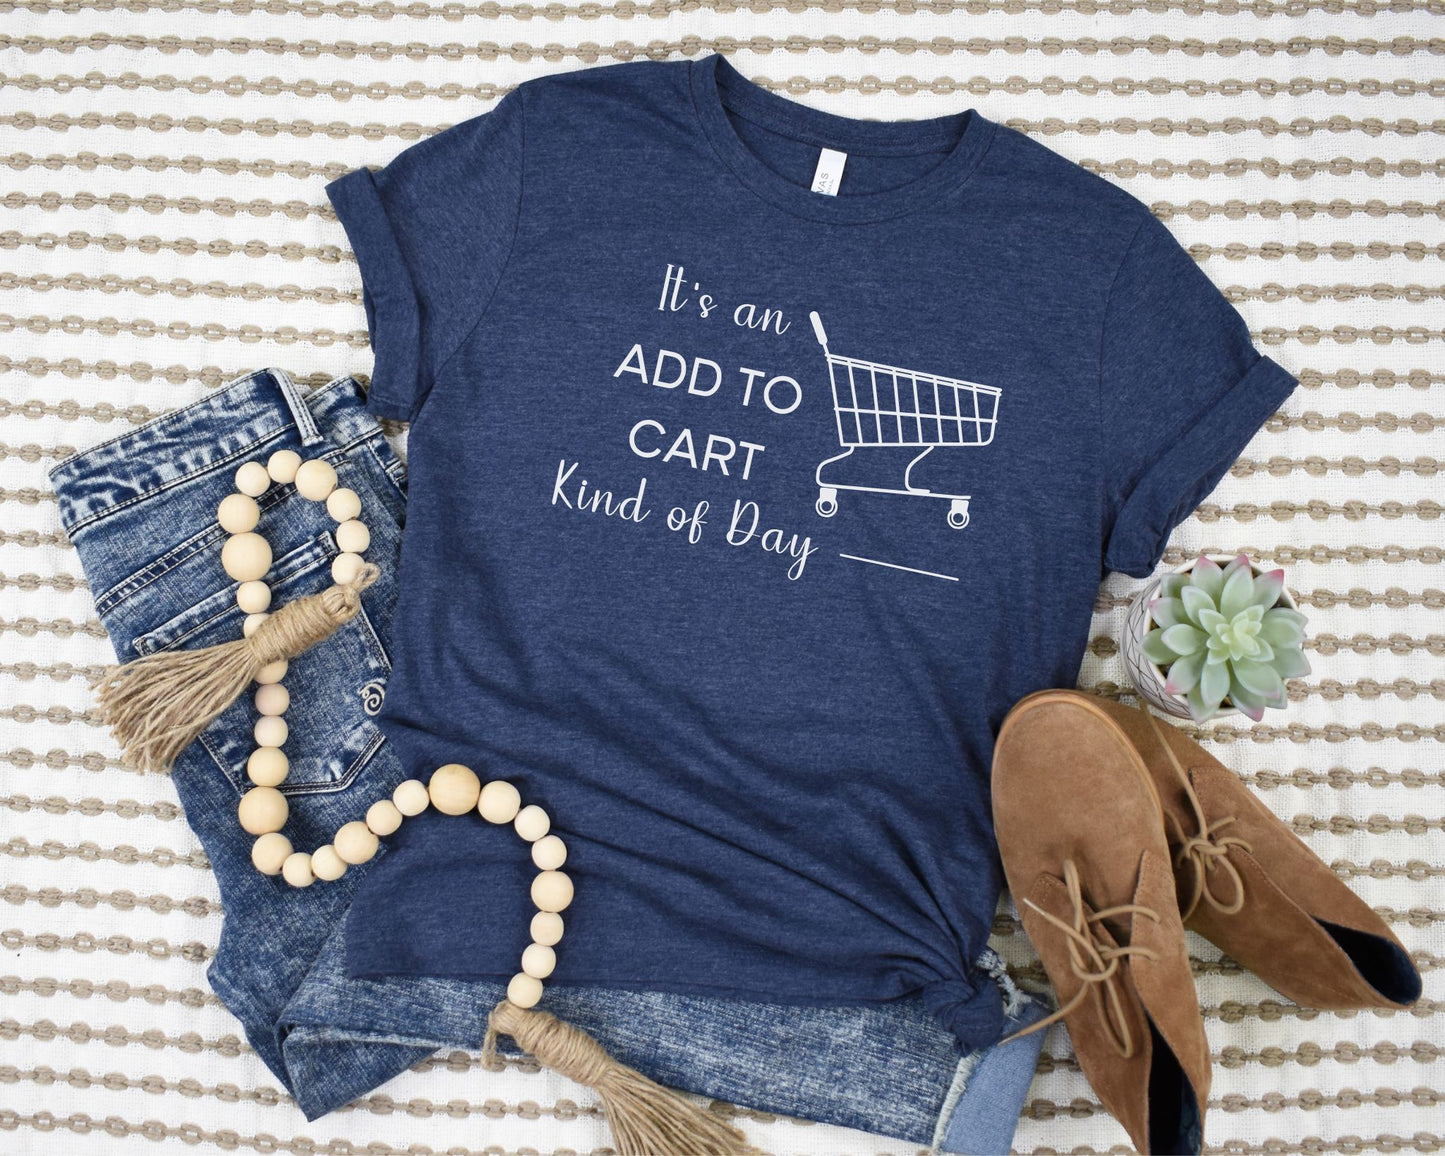 Add to Cart Kind of Day (HeatherMauve/HeatherPeach/HeatherNavy/Navy)